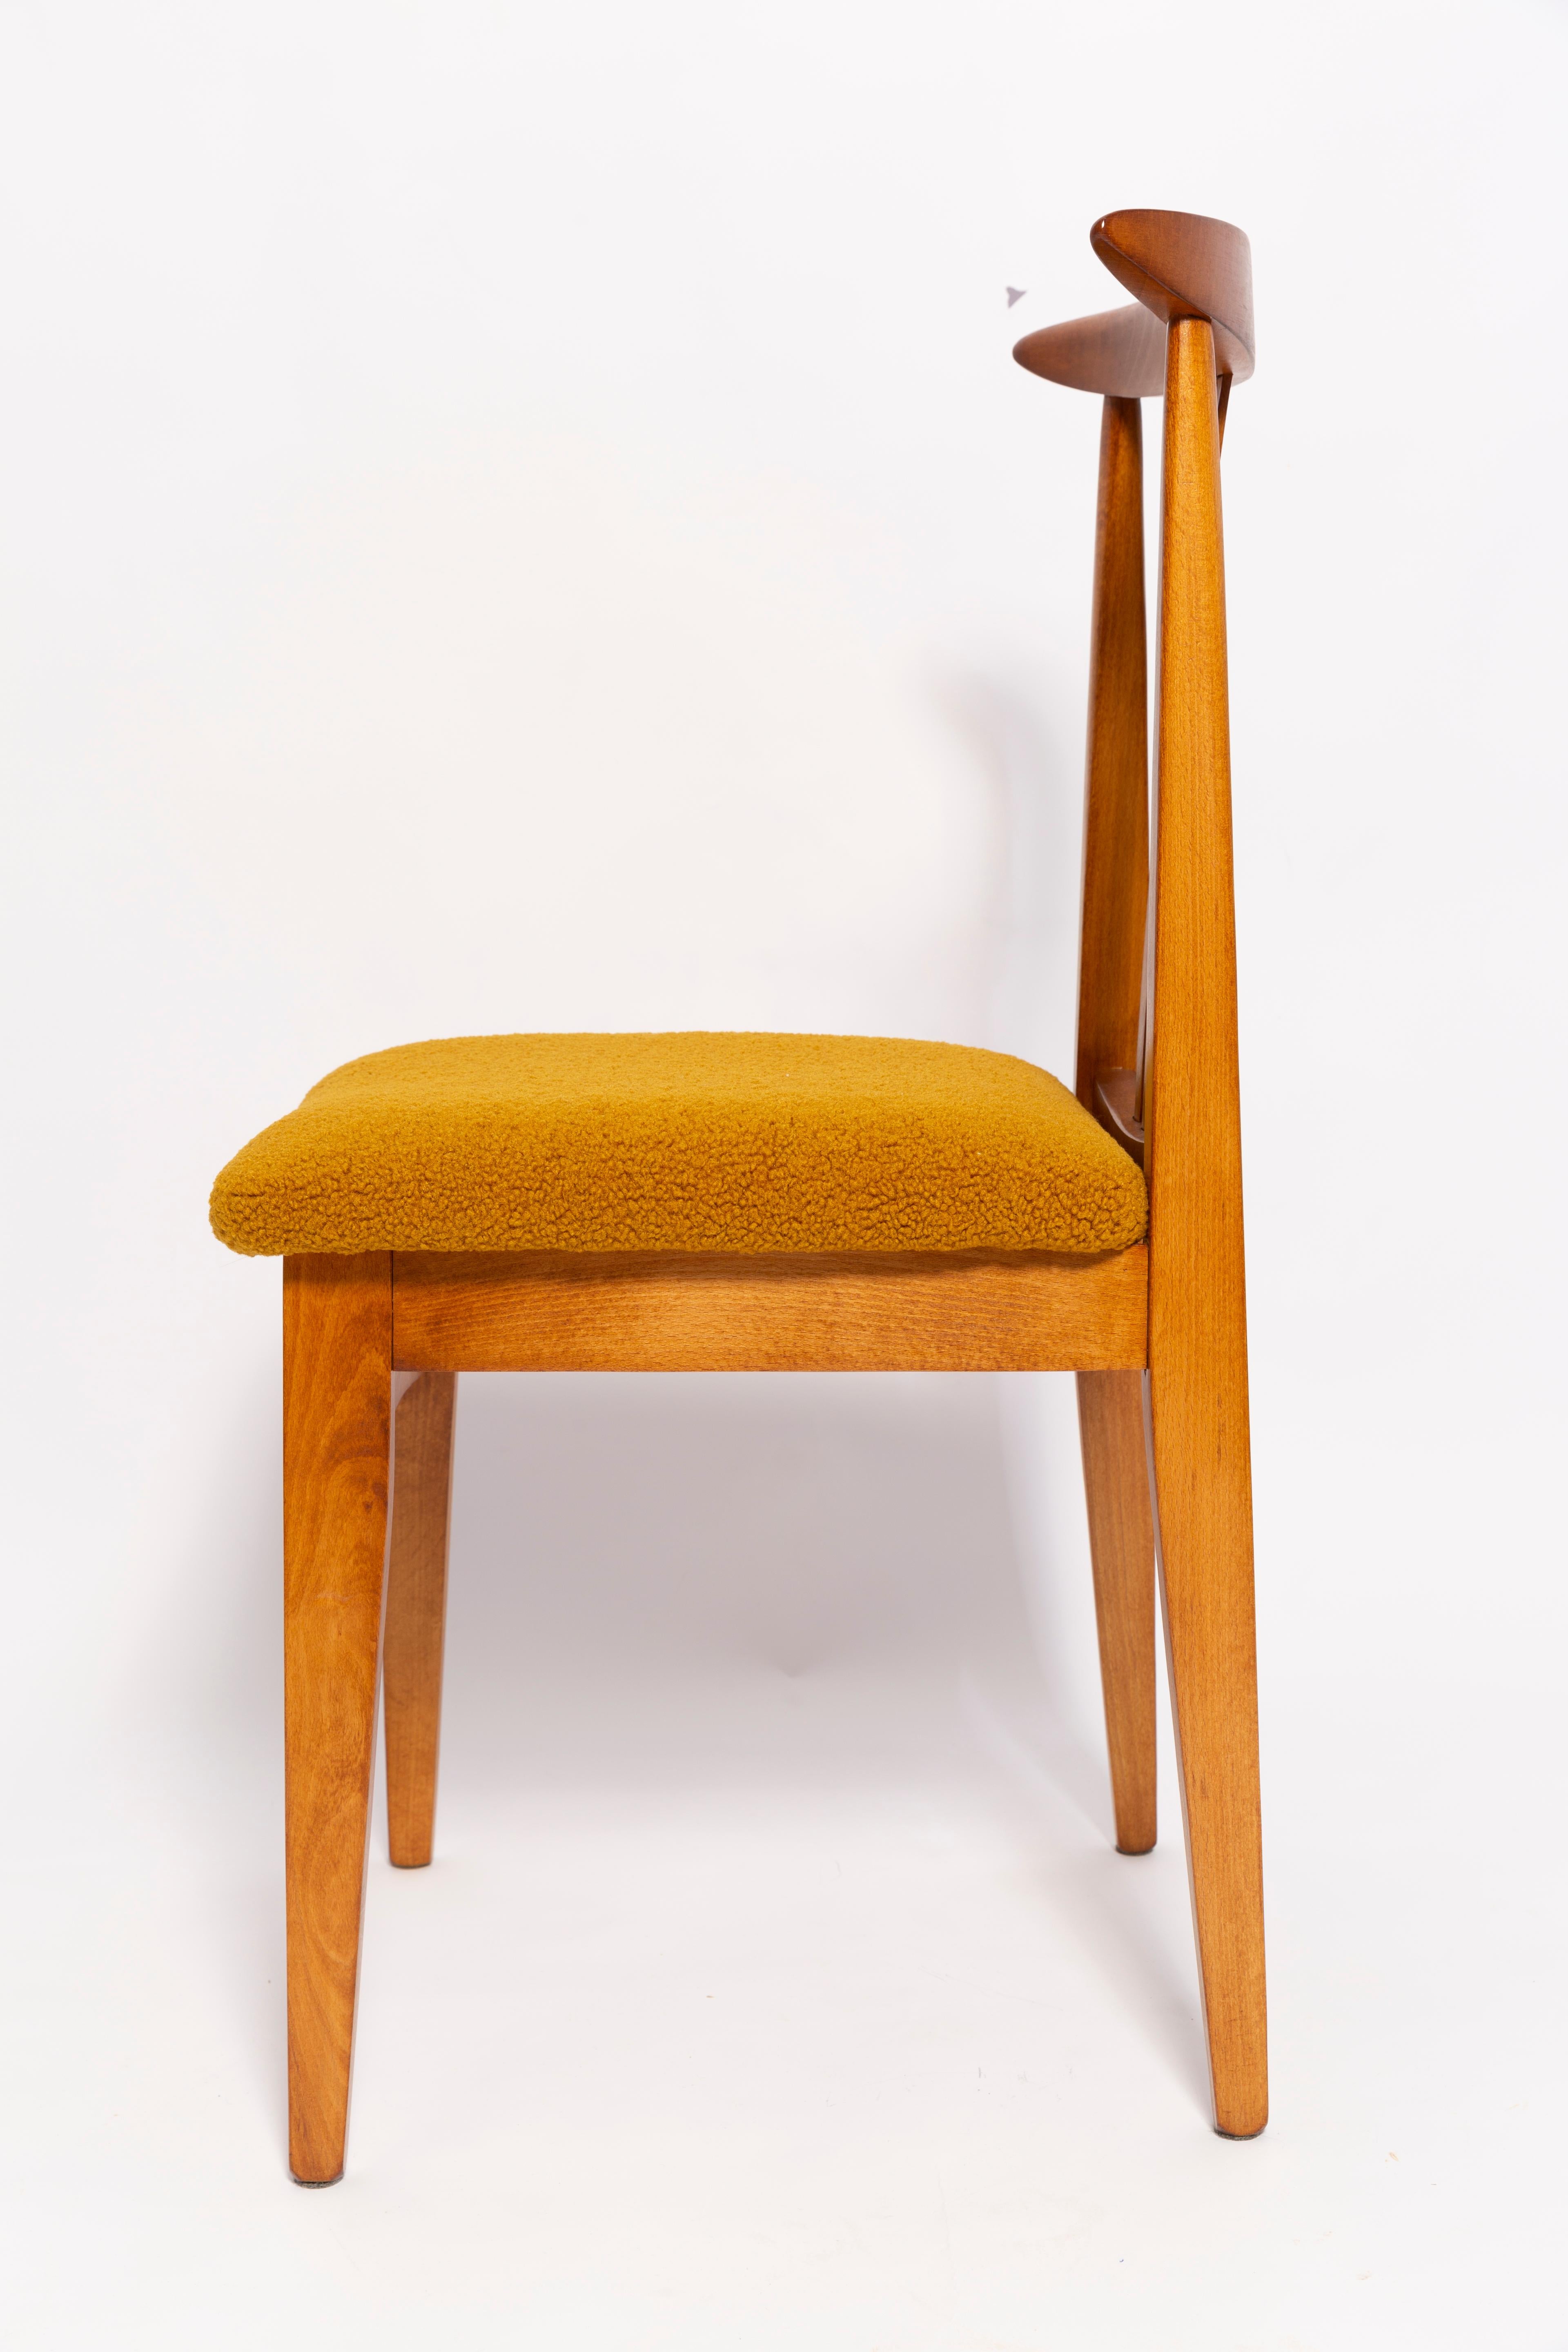 20th Century Mid-Century Ochre Boucle Chair, Medium Wood, M. Zielinski, Europe 1960s For Sale